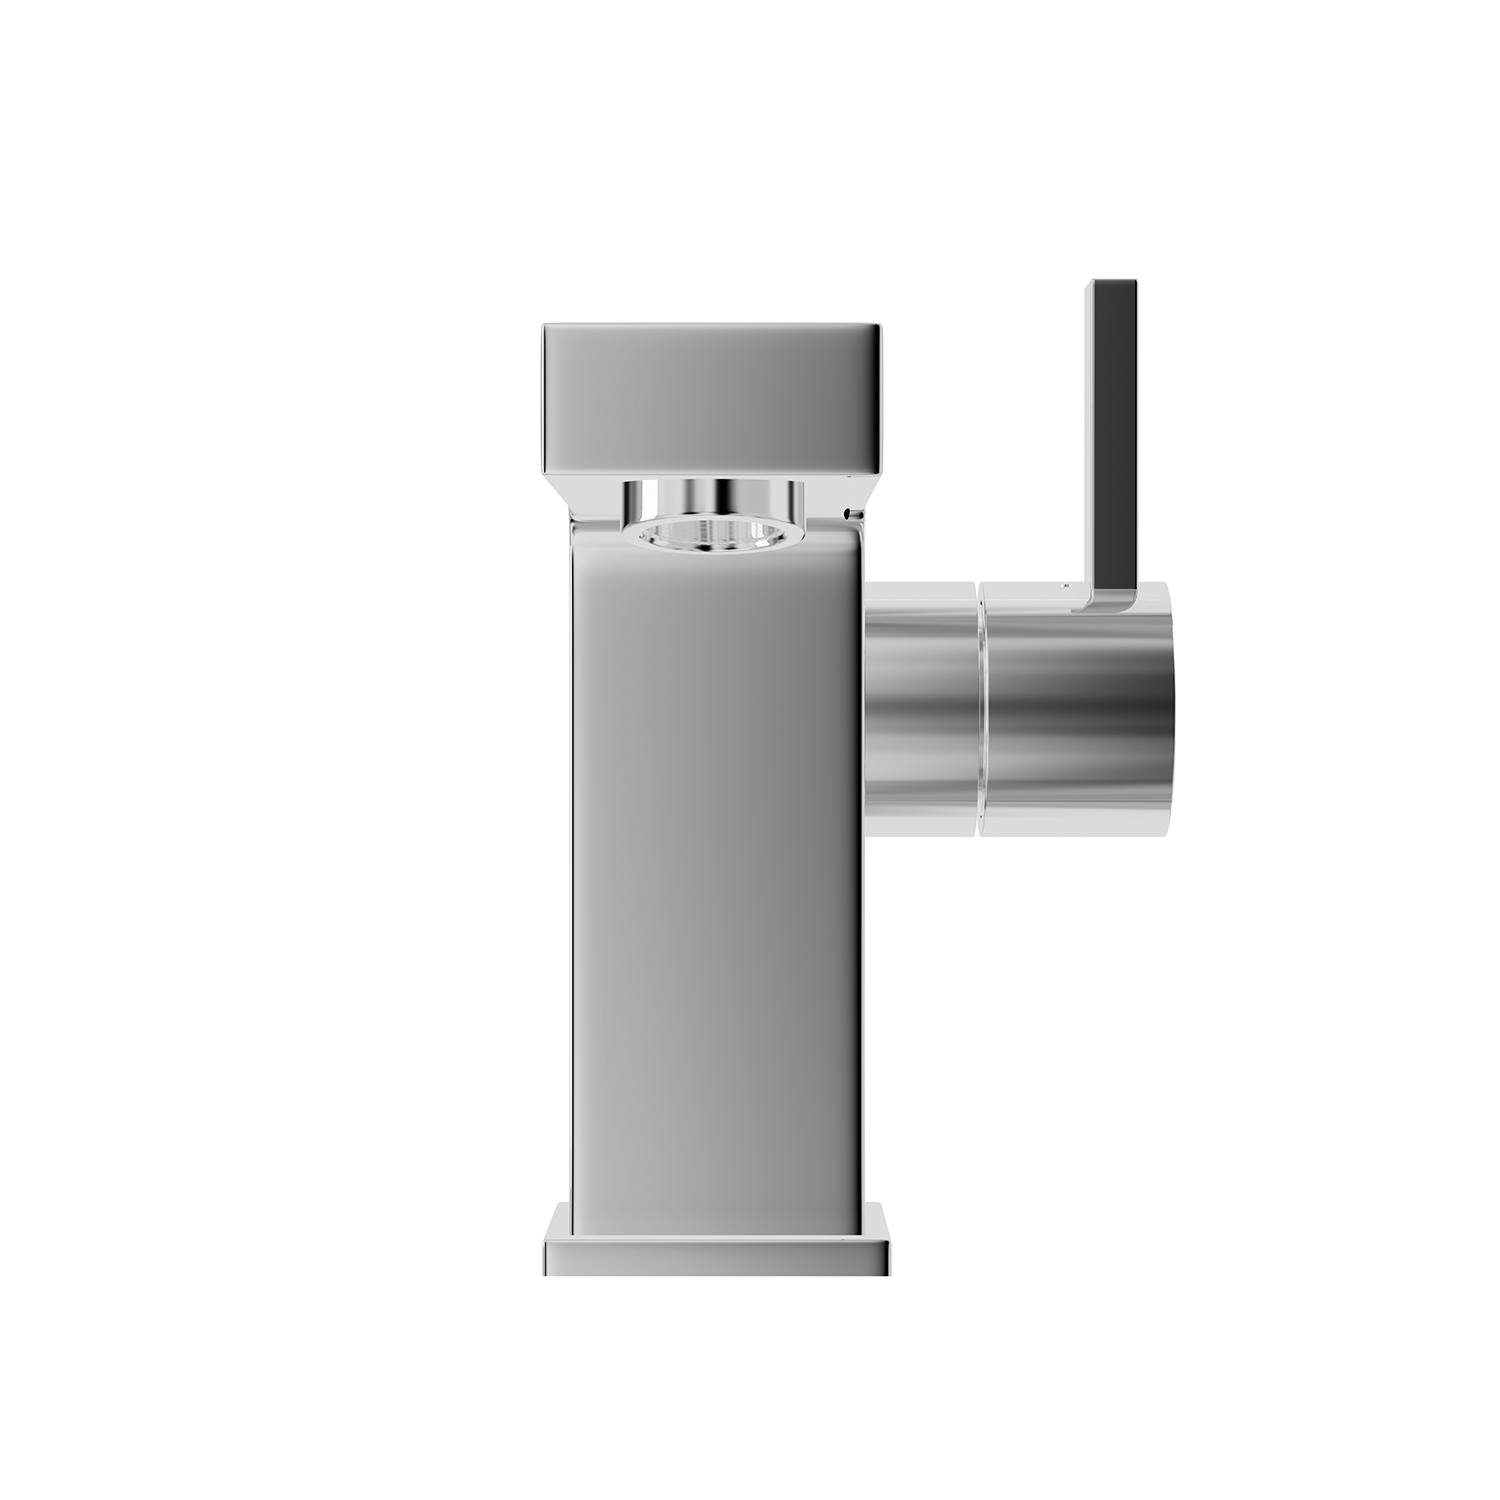 DAX Single Handle Bathroom Faucet, Brass Body, Chrome Finish, 3-15/16 x 4-1/8 Inches (DAX-8227)